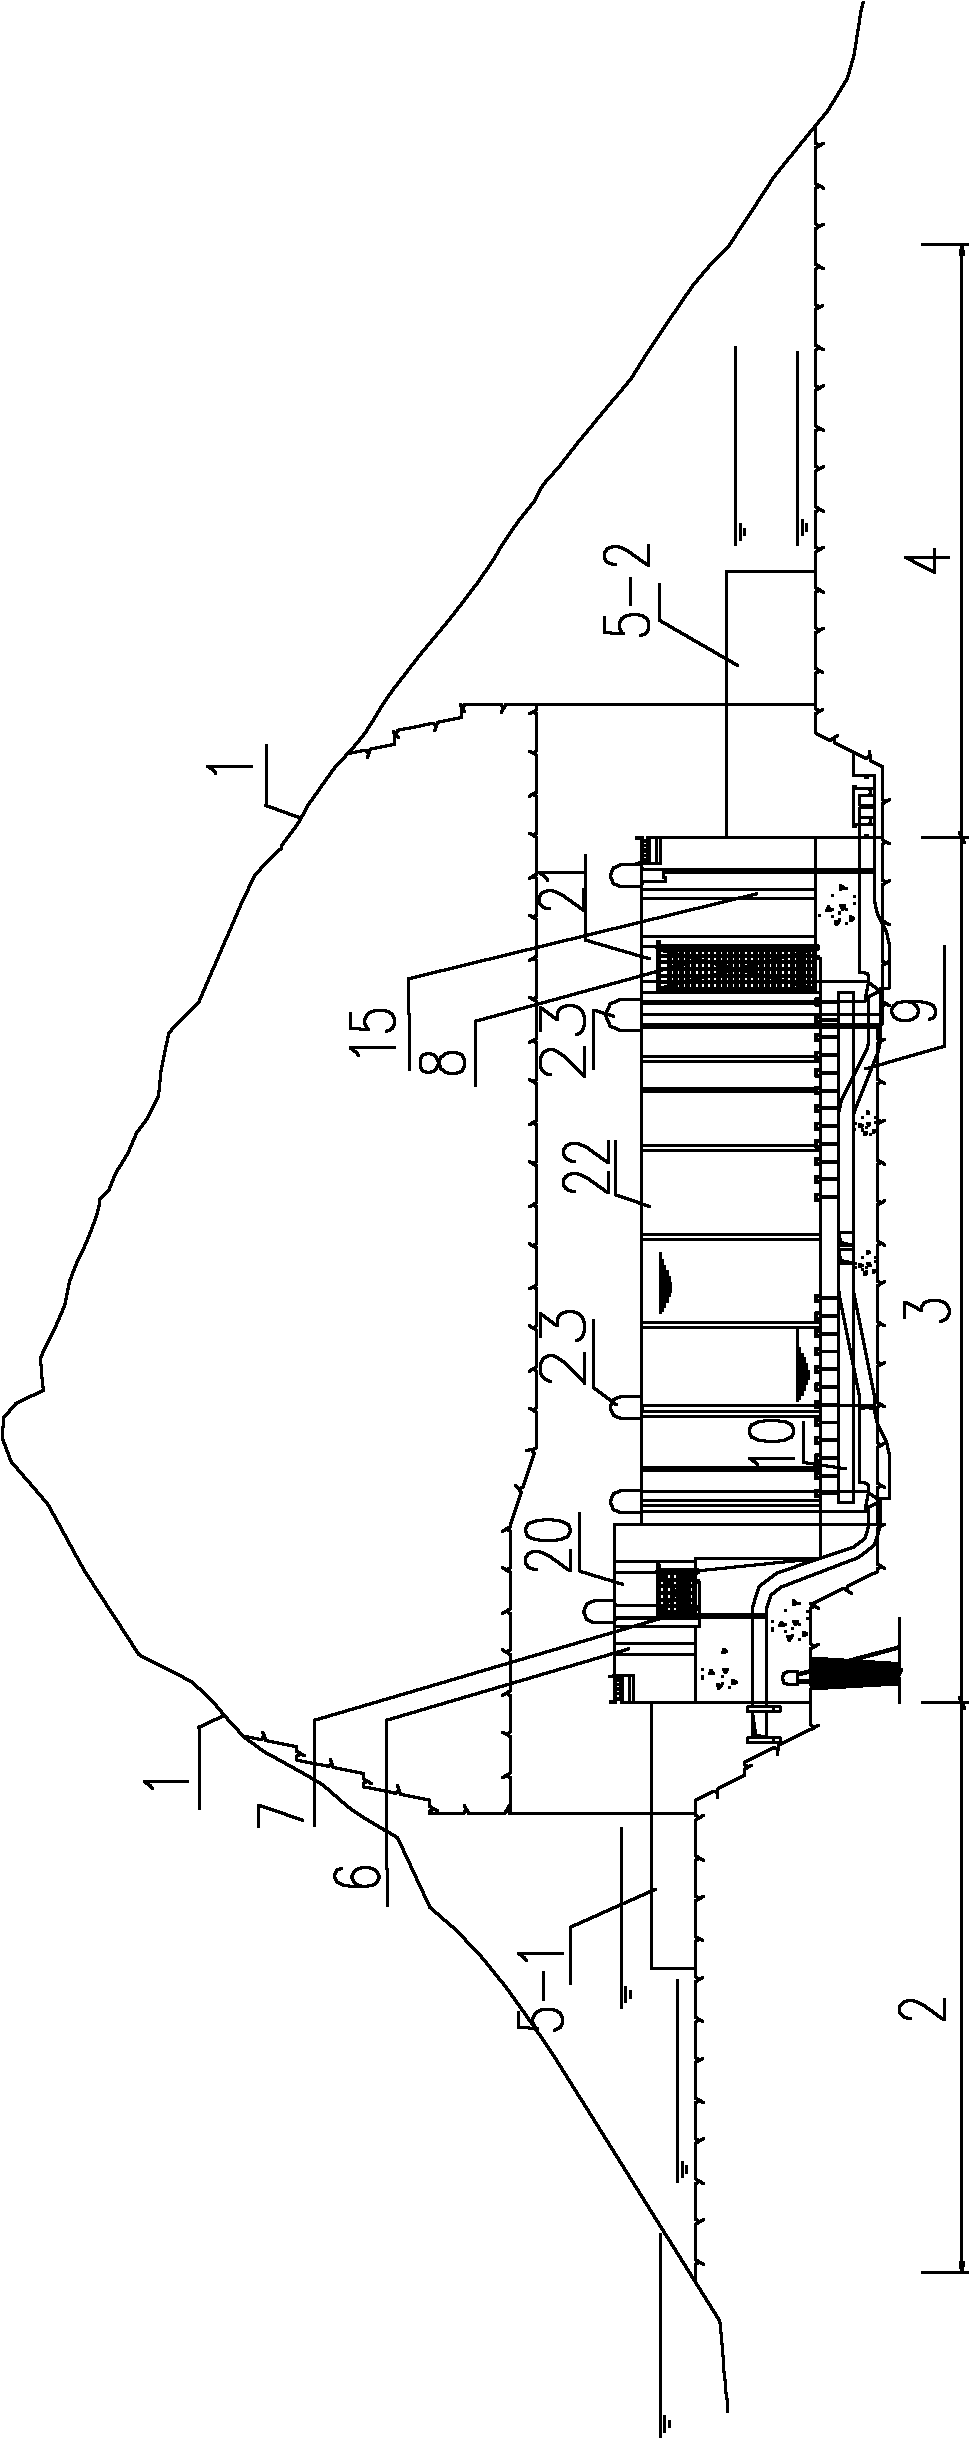 Underground shiplock arranged in mountain body